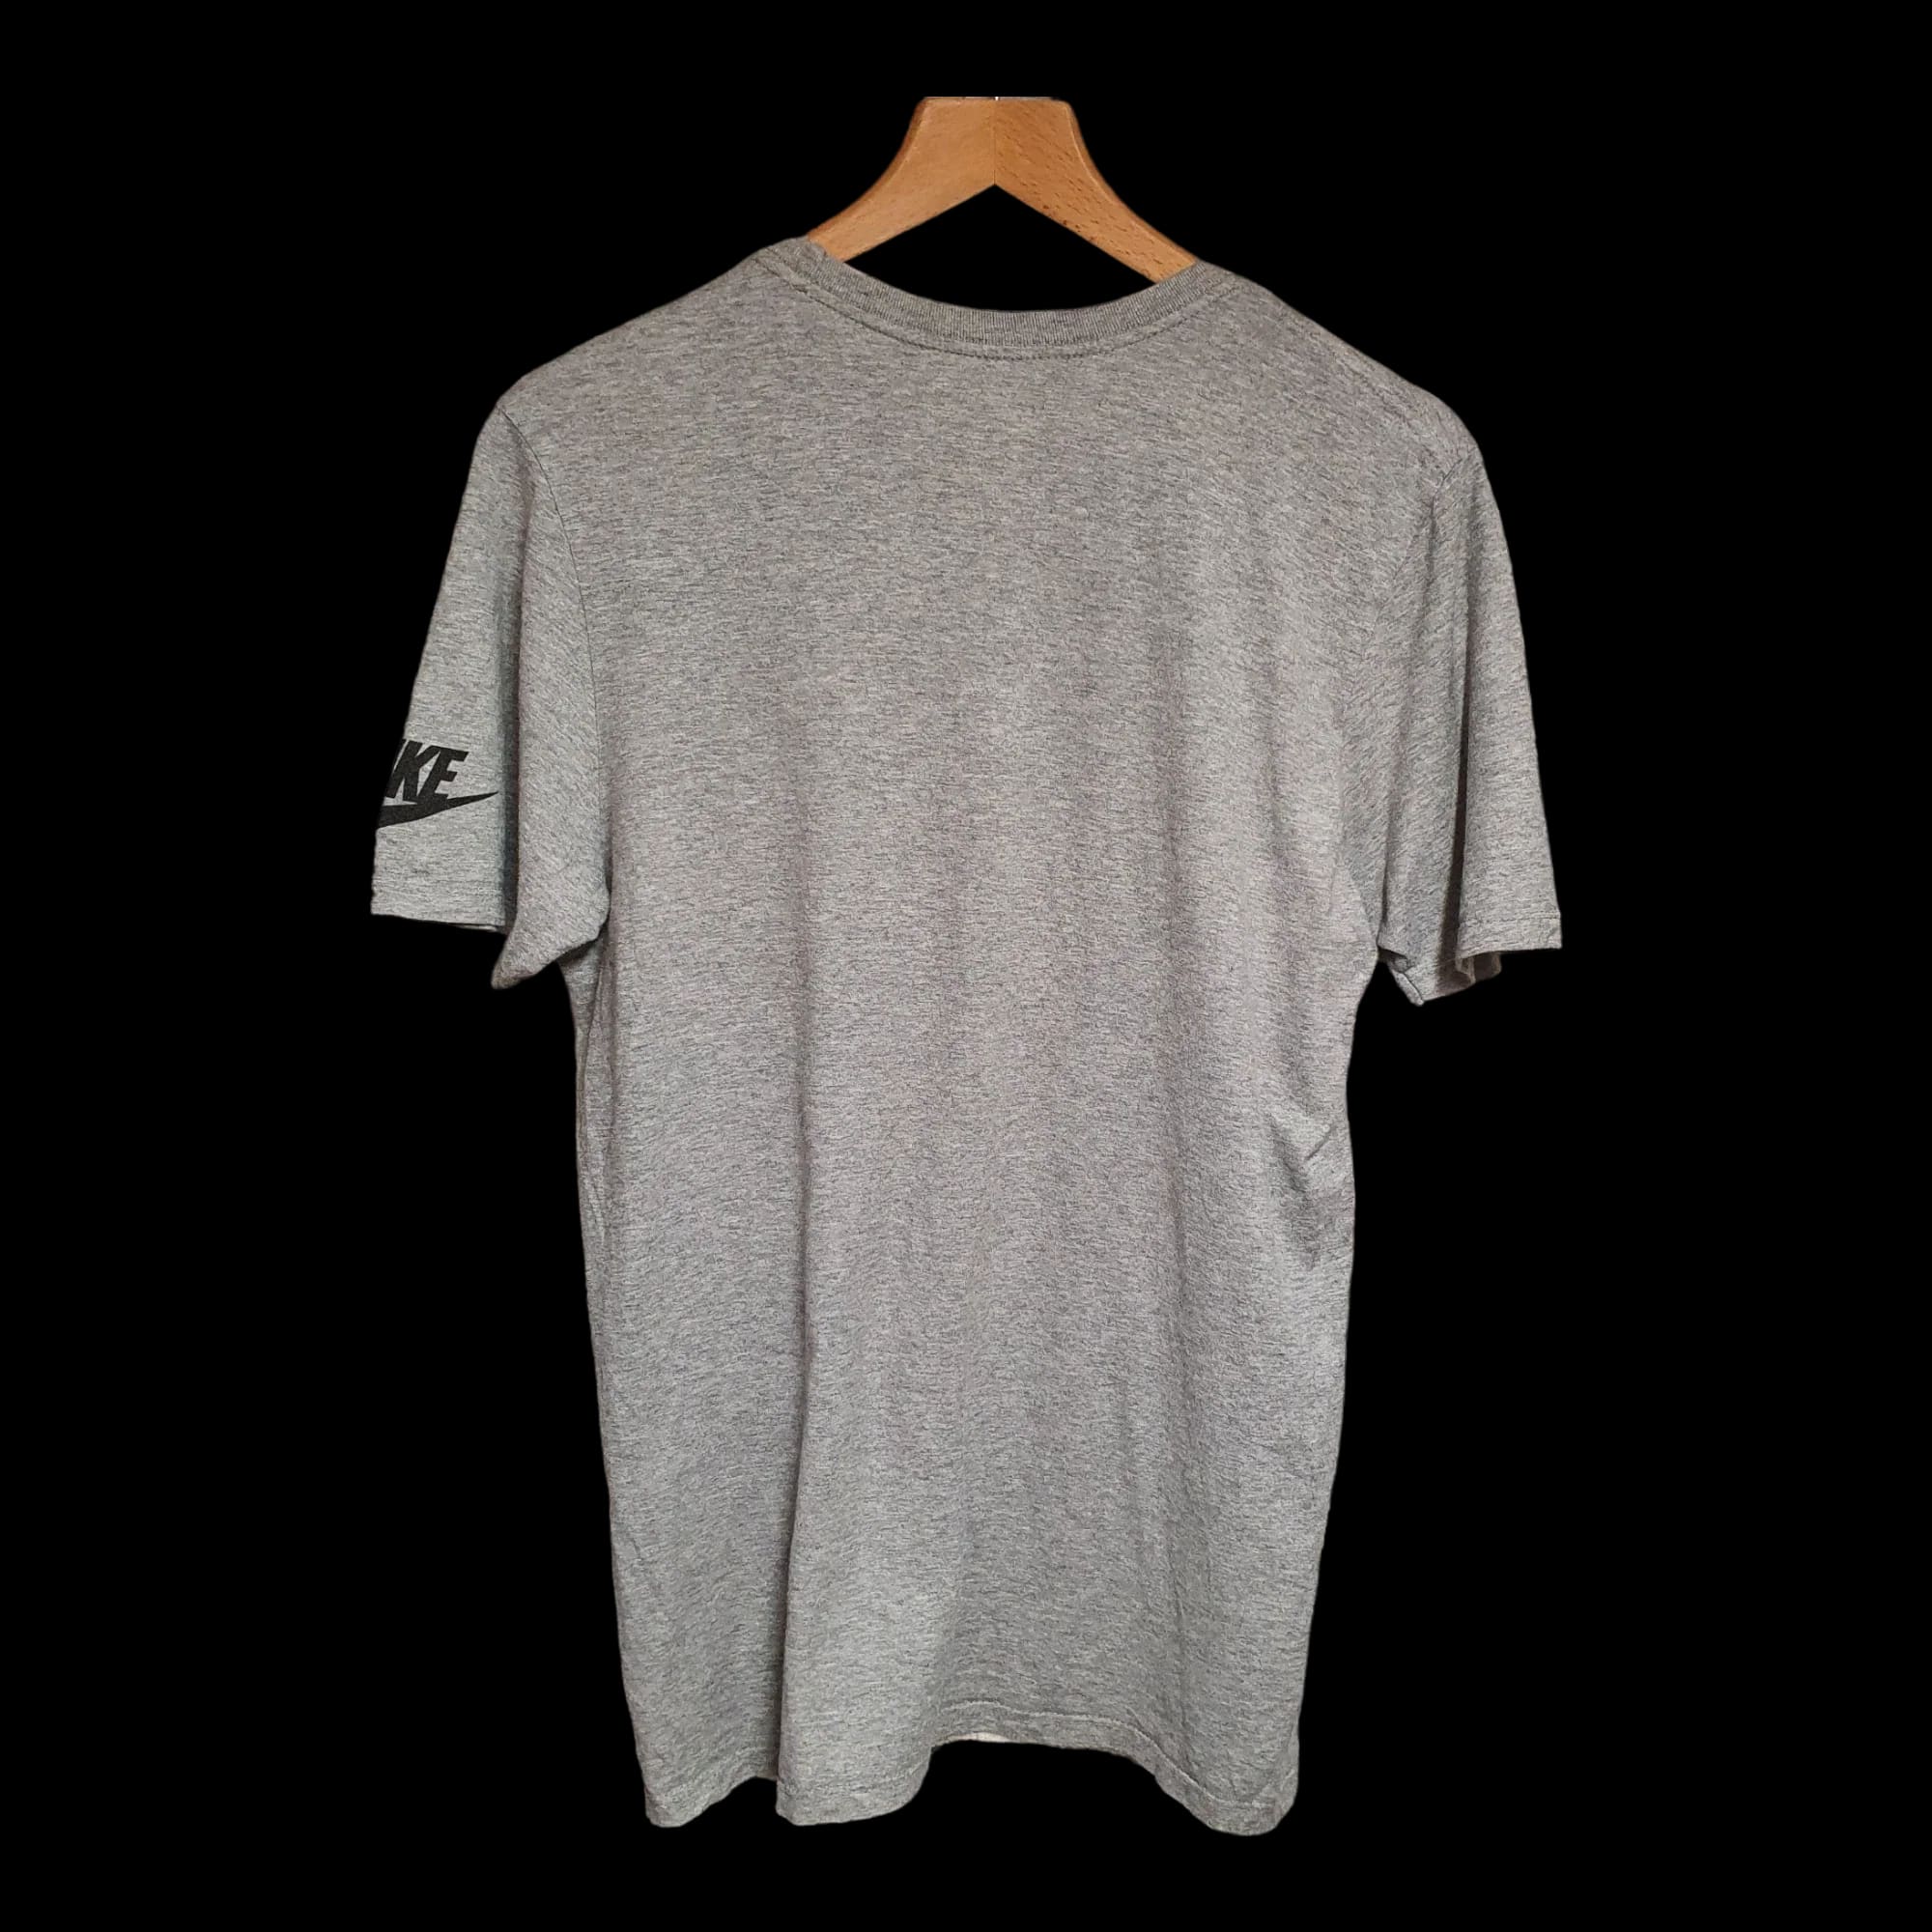 Unisex Vintage Nike Spell Out Grey T-Shirt UK Medium